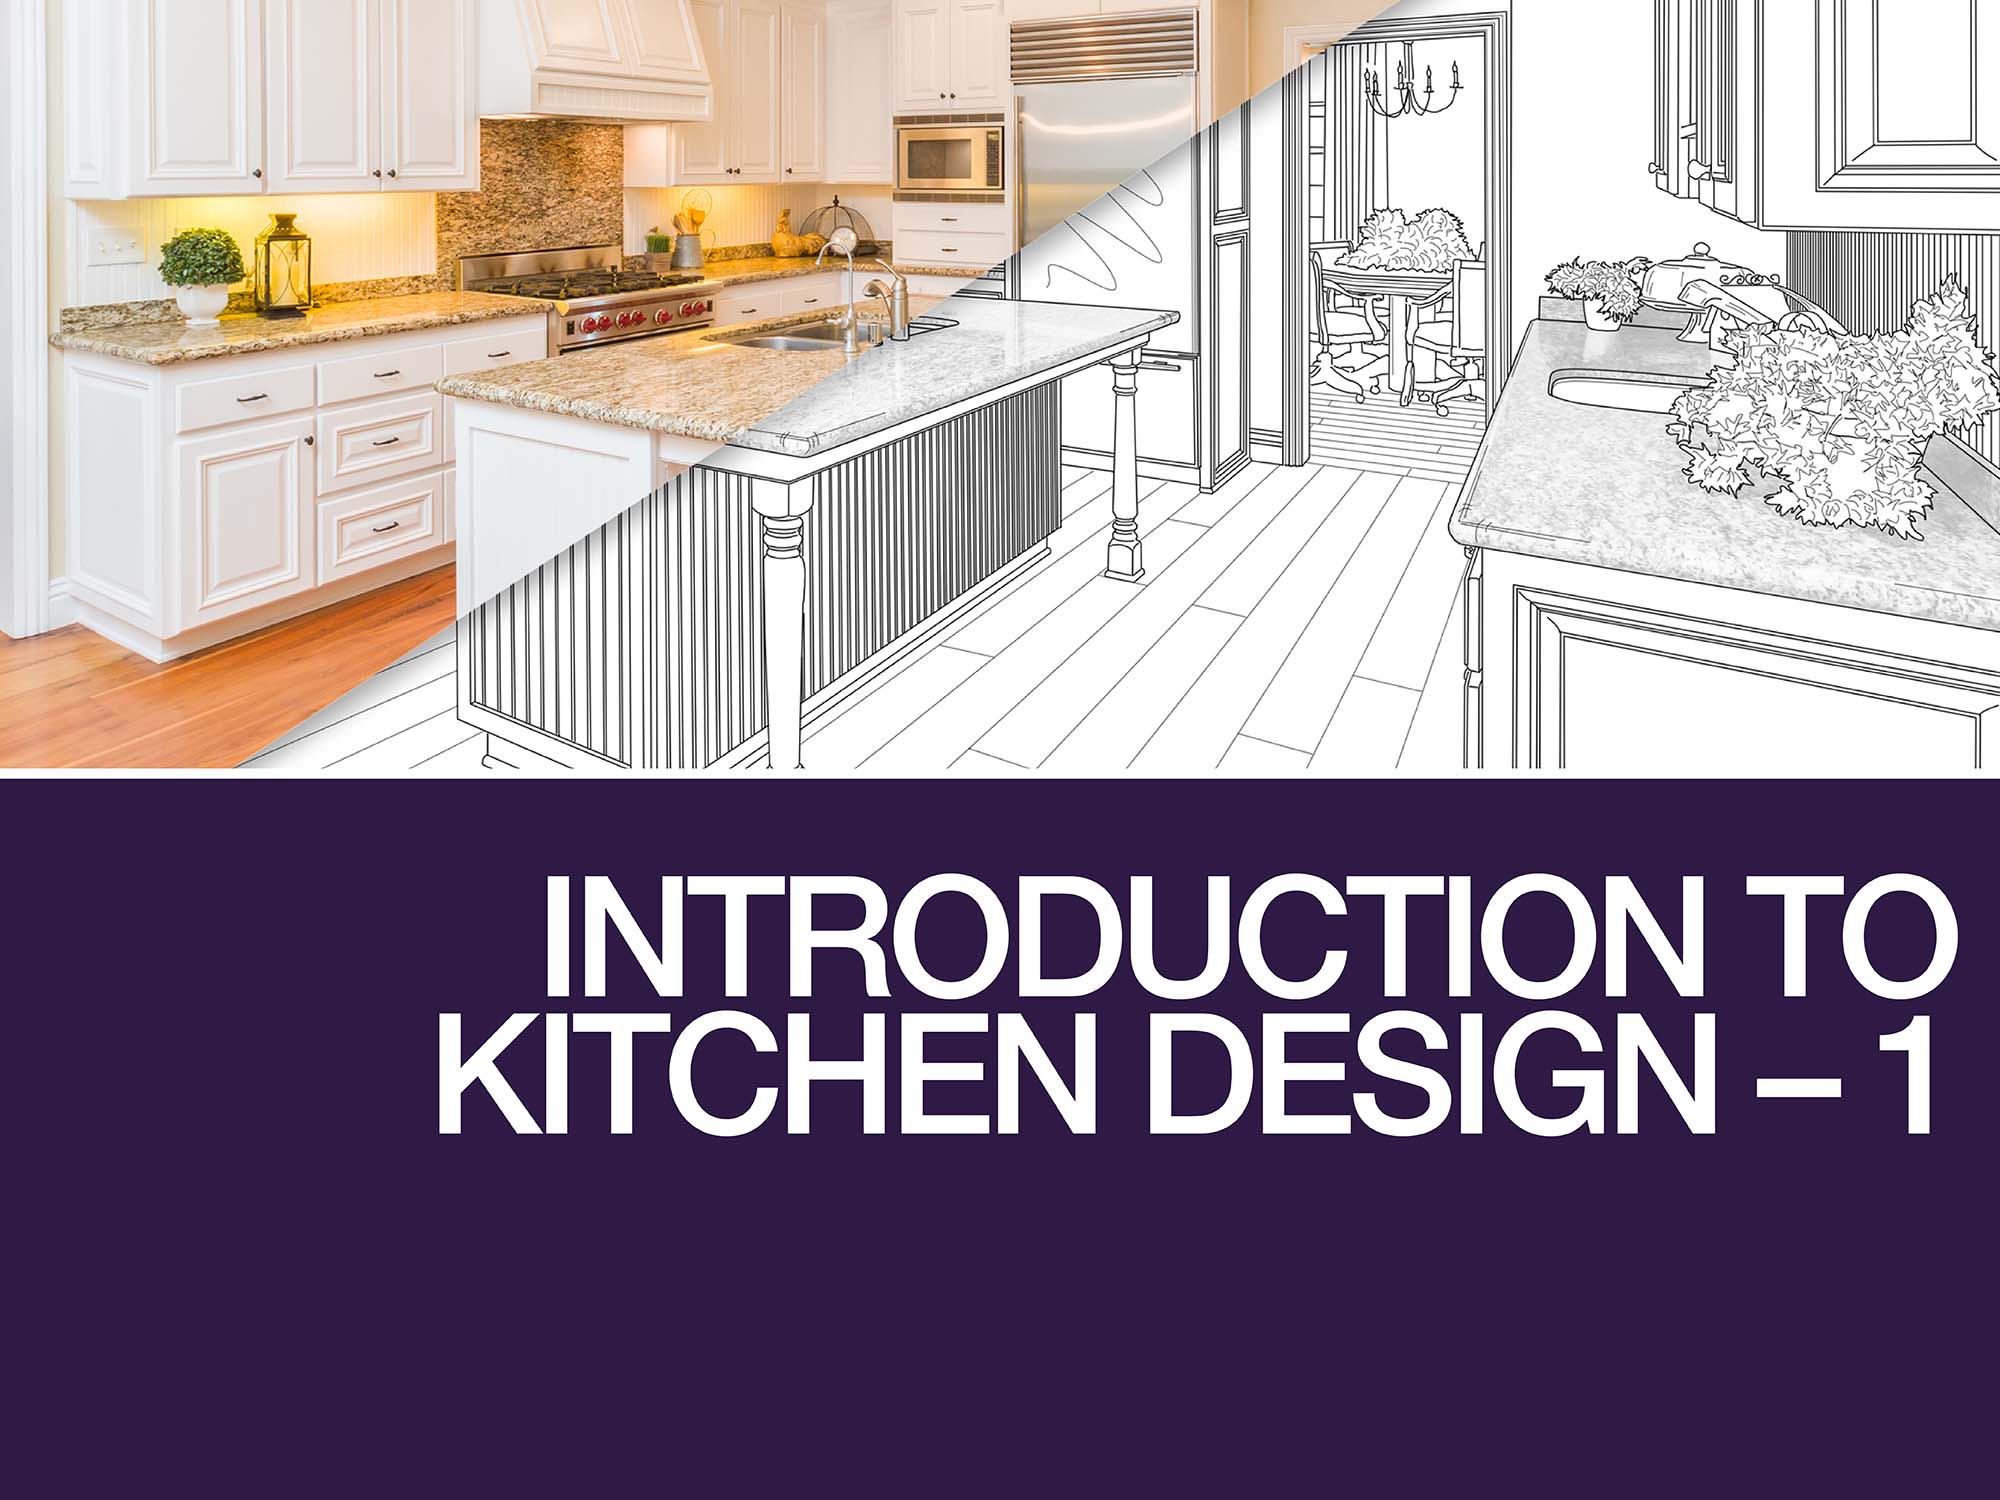 https://kb.nkba.org/uploads/2021/12/Intro_Kitchen_Design_1.jpg